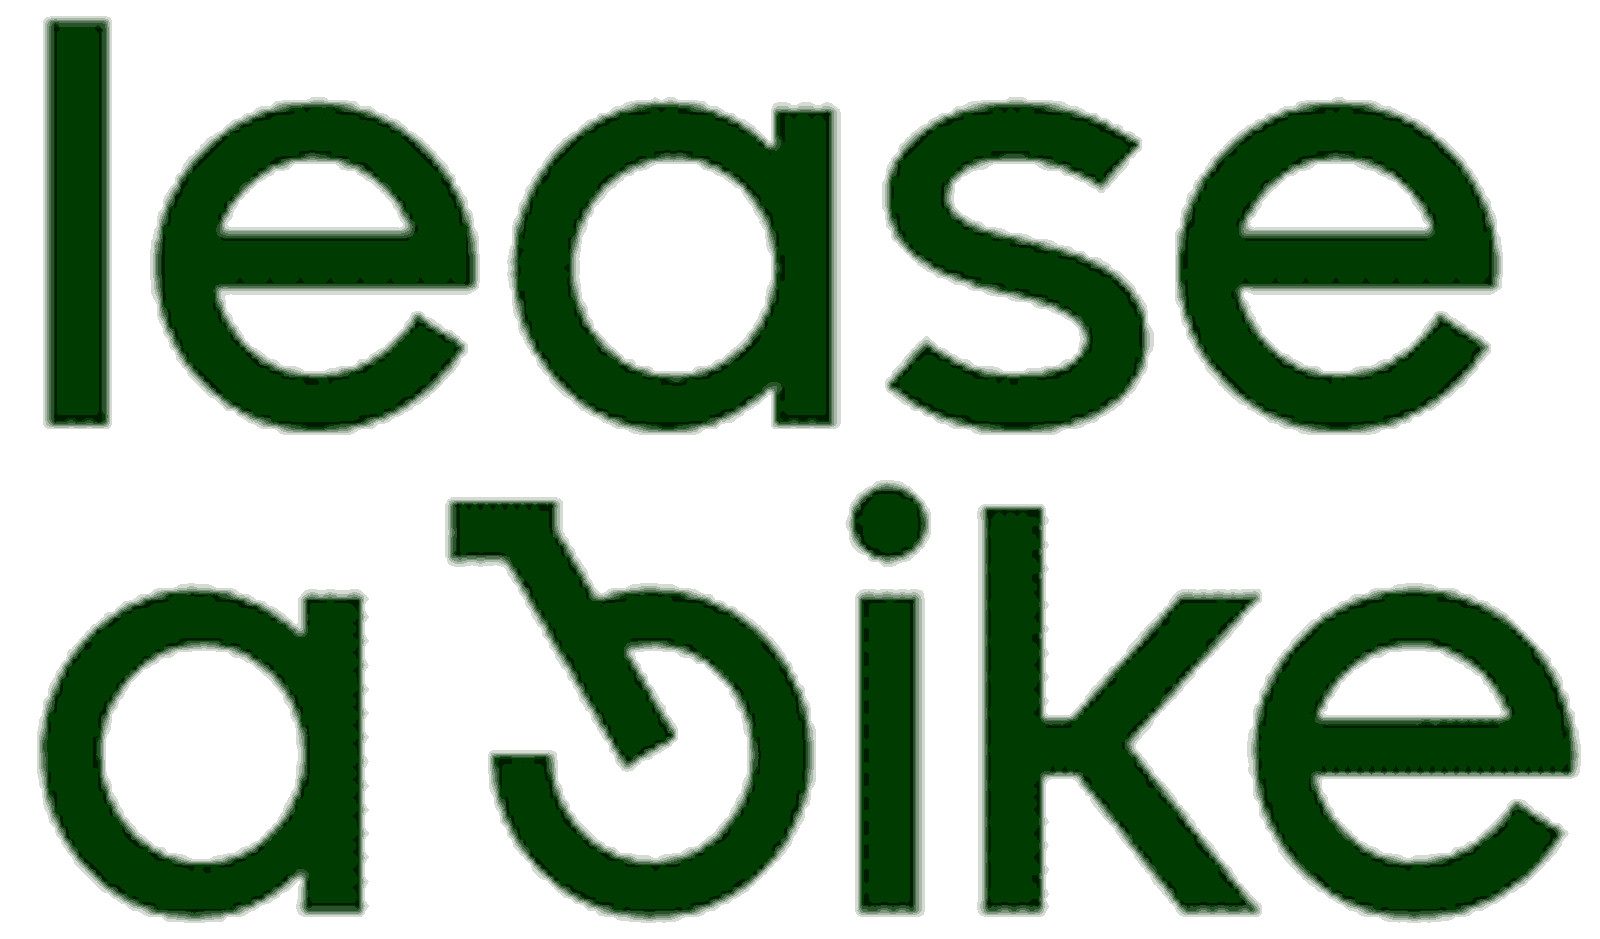 Jumbo-Visma Will Reportedly Become 'Visma-Lease a Bike